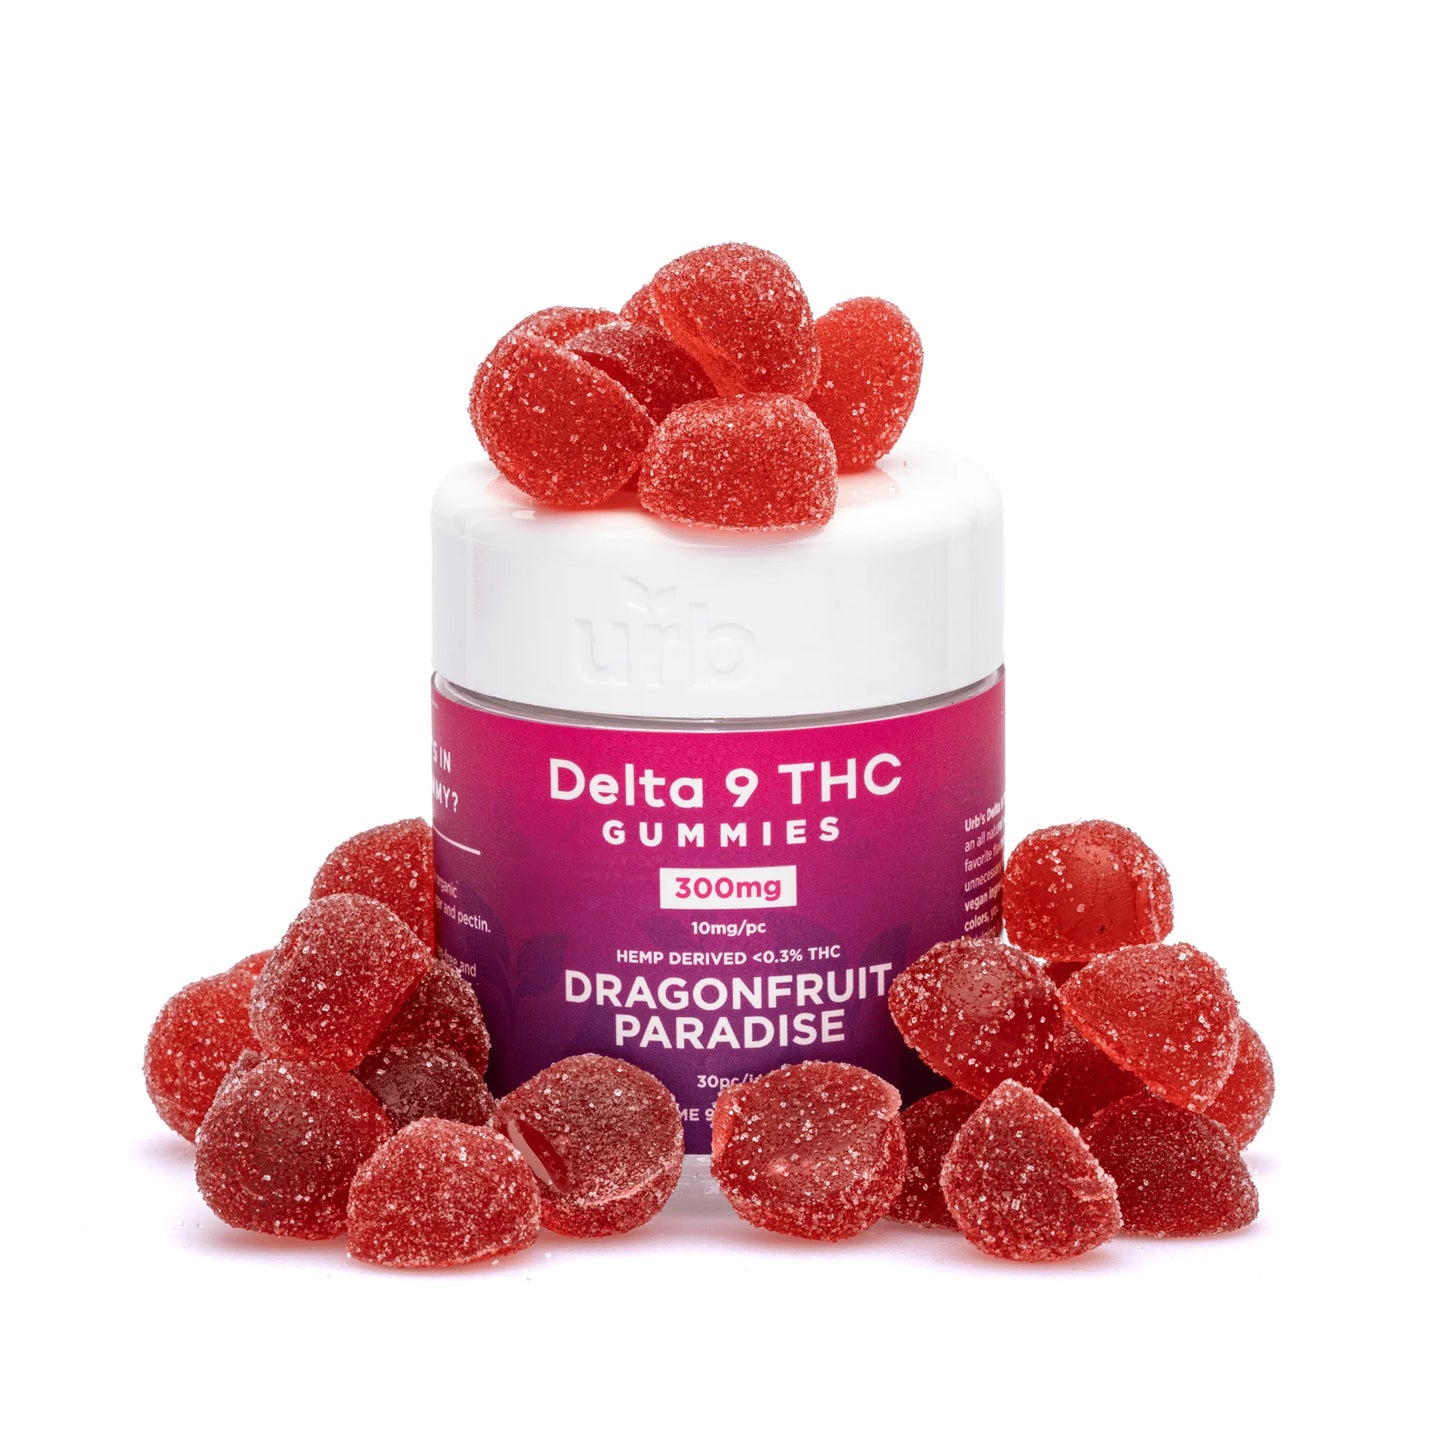 Urb Delta 9 THC Gummies – Dragonfruit Paradise (300 mg Total Delta 9 THC)